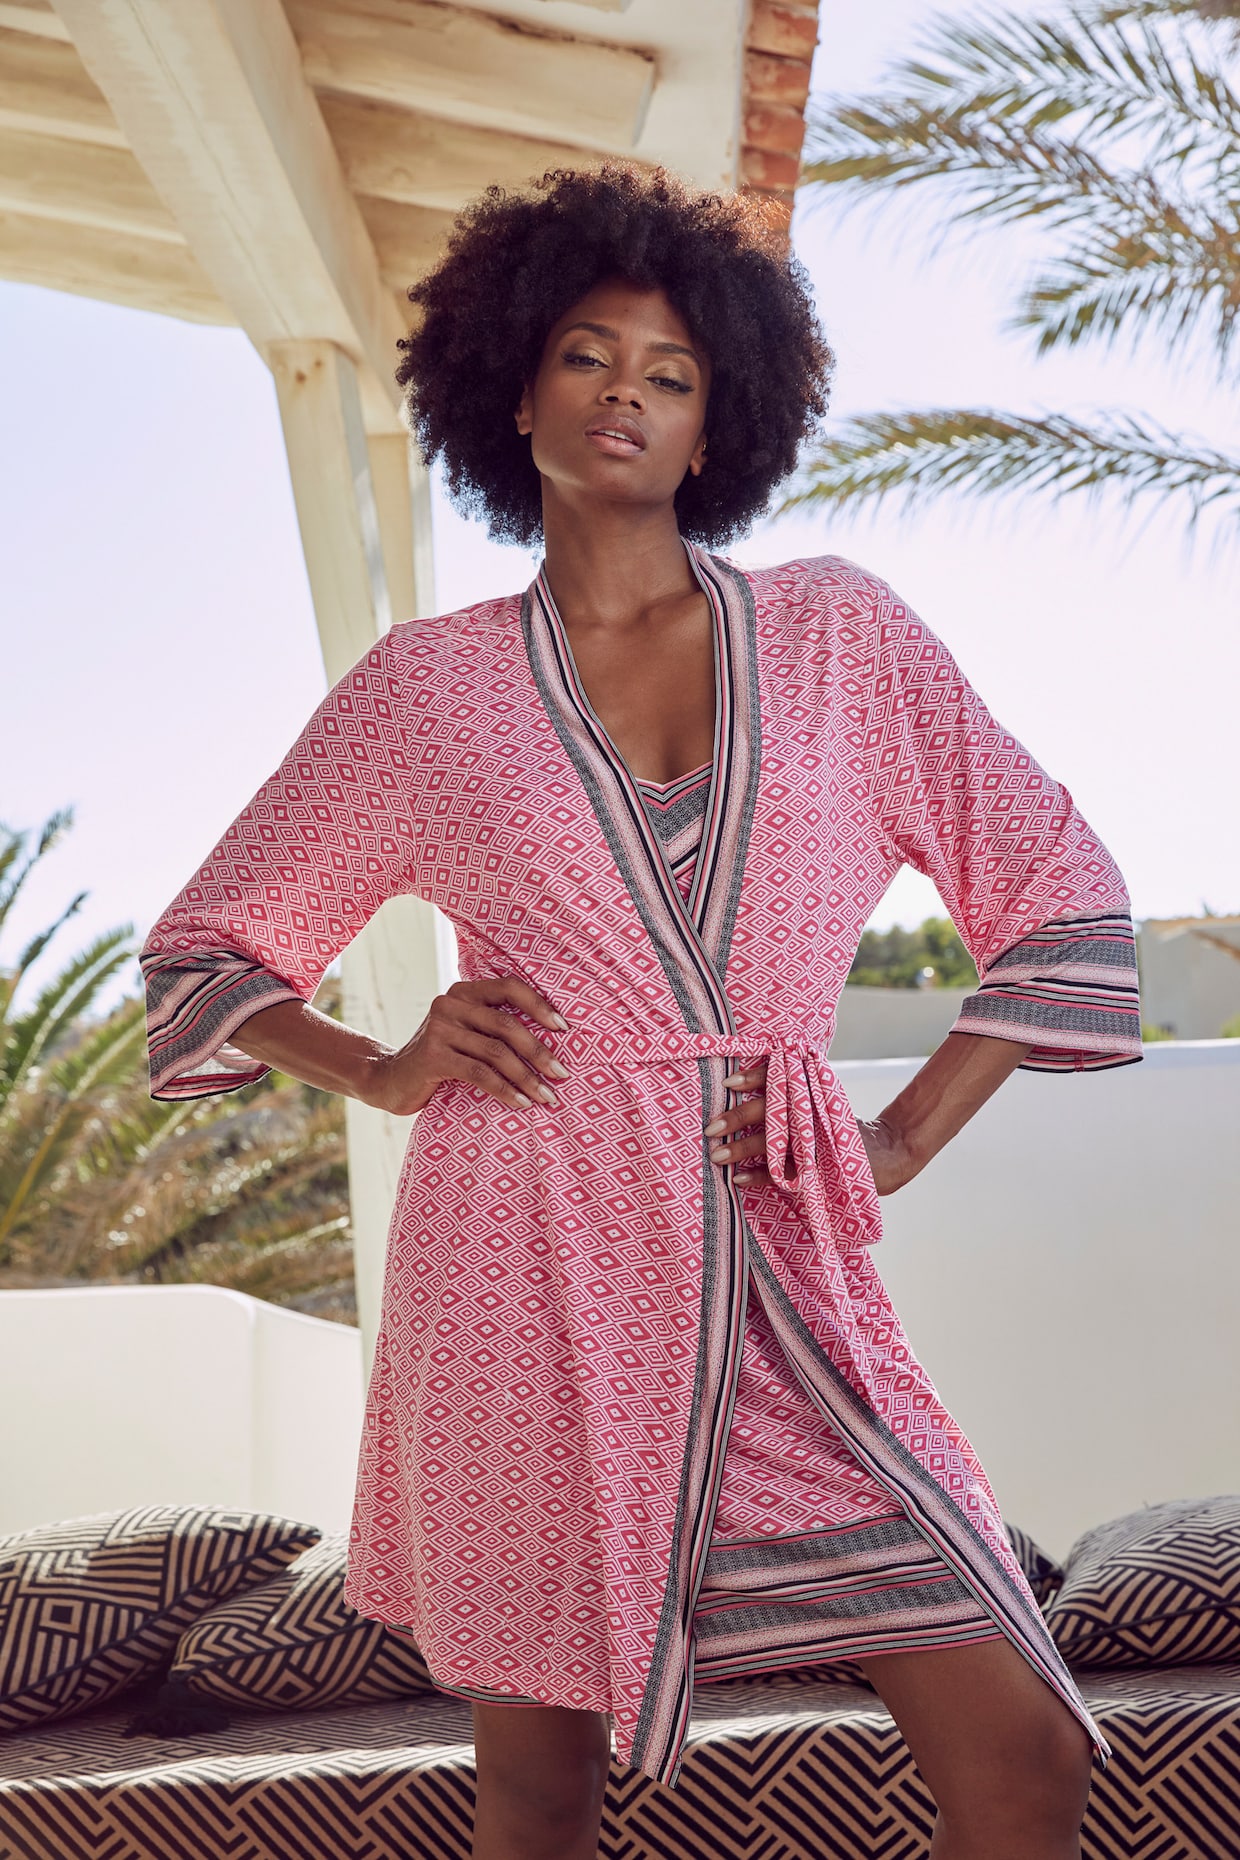 Vivance Dreams Kimono - pink gedessineerd